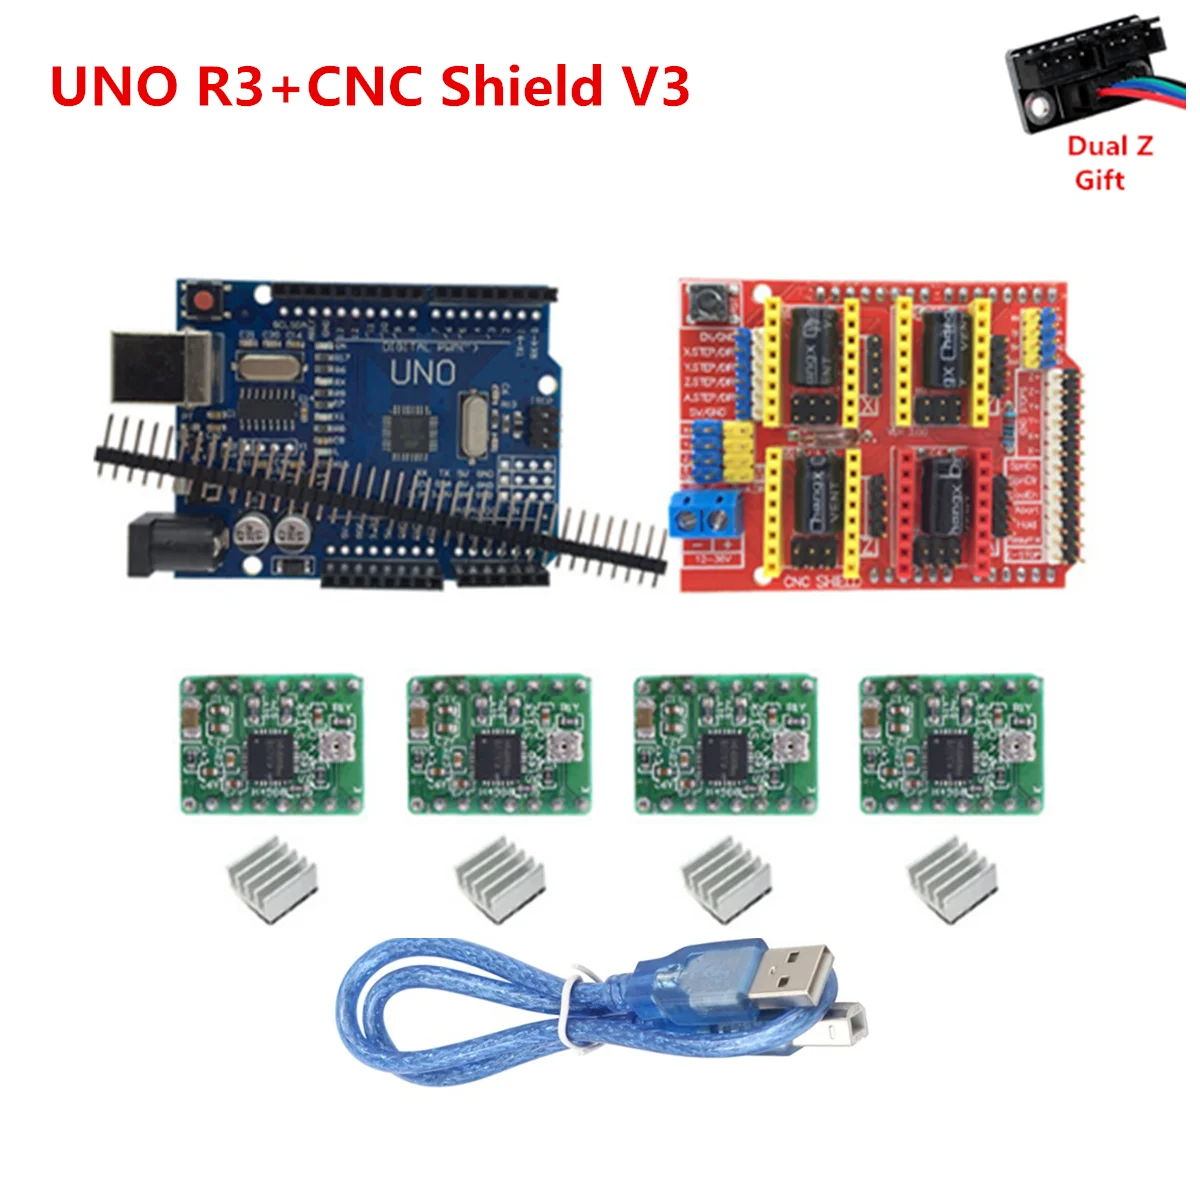 

cnc shield V3 UNO R3 expansion board GRBL 1.1 monitor A4988 cnc stepper driver diy cnc parts for Arduino laser engraving machine